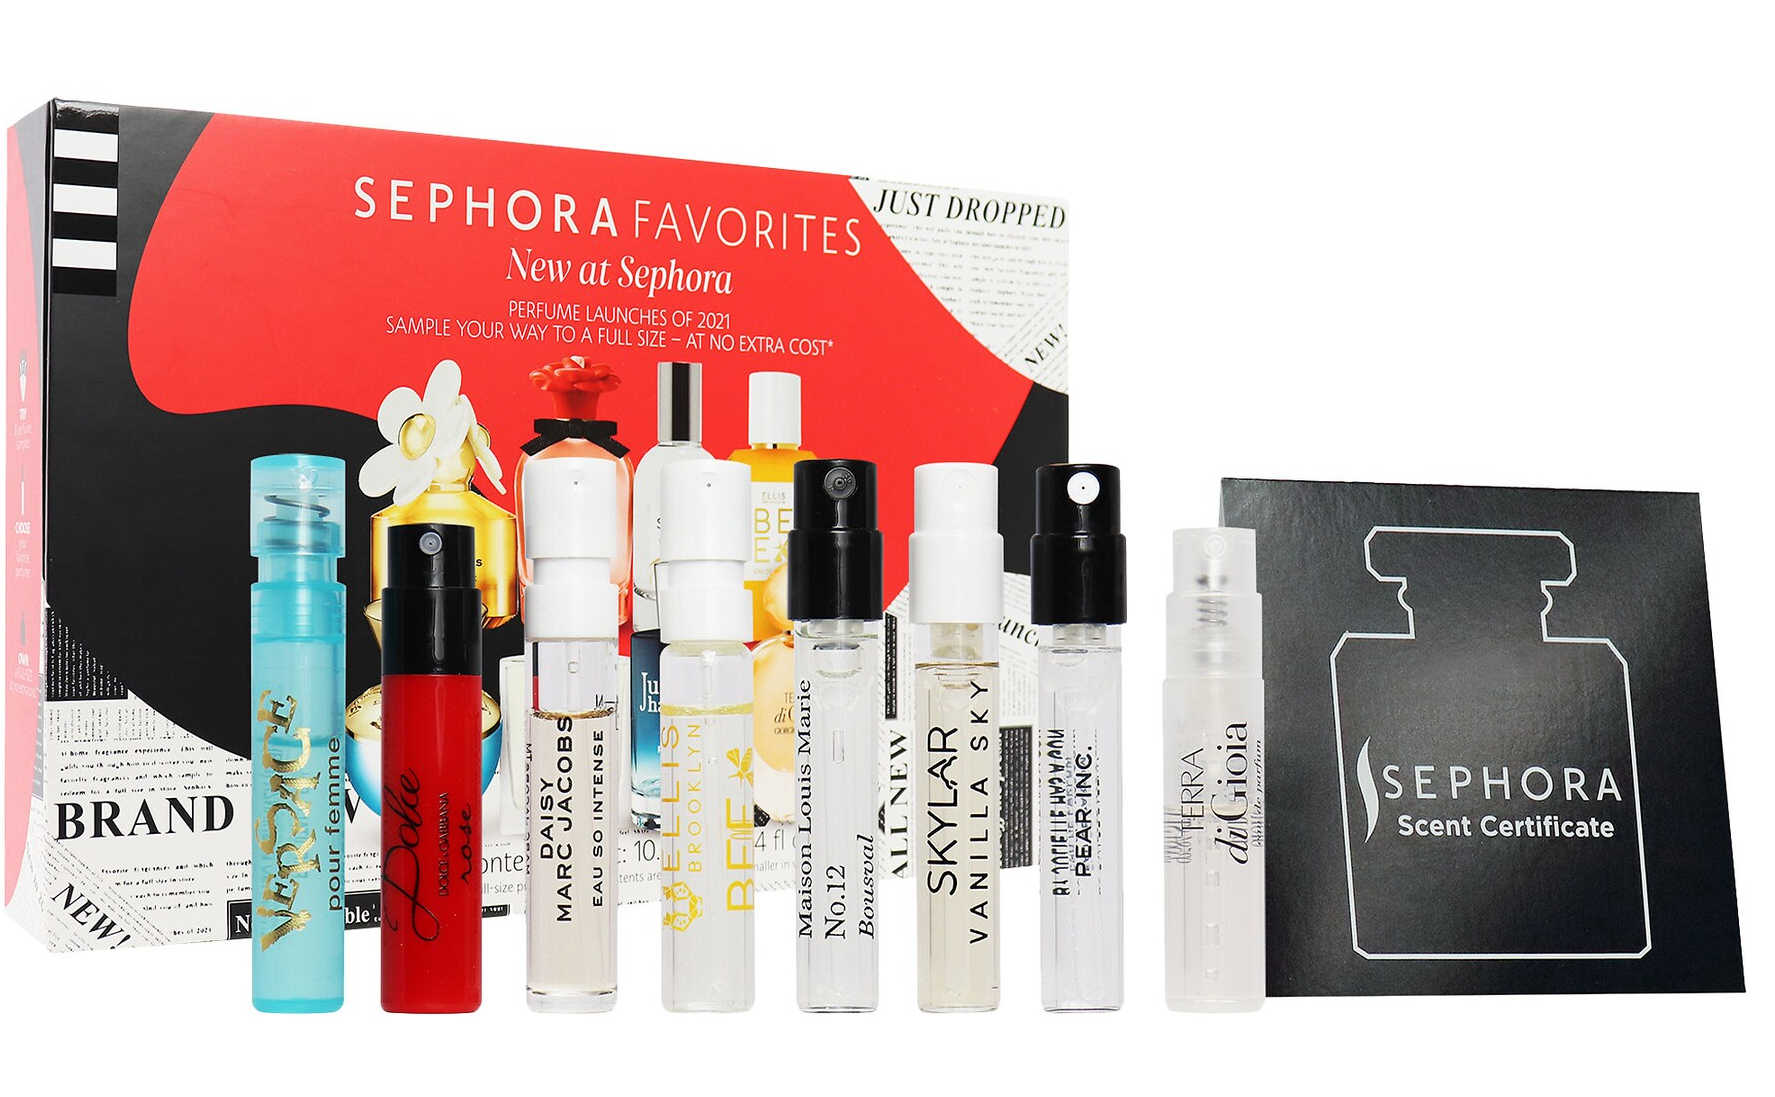 Sephora Favorites New at Sephora Perfume Sampler Set! Hello Subscription